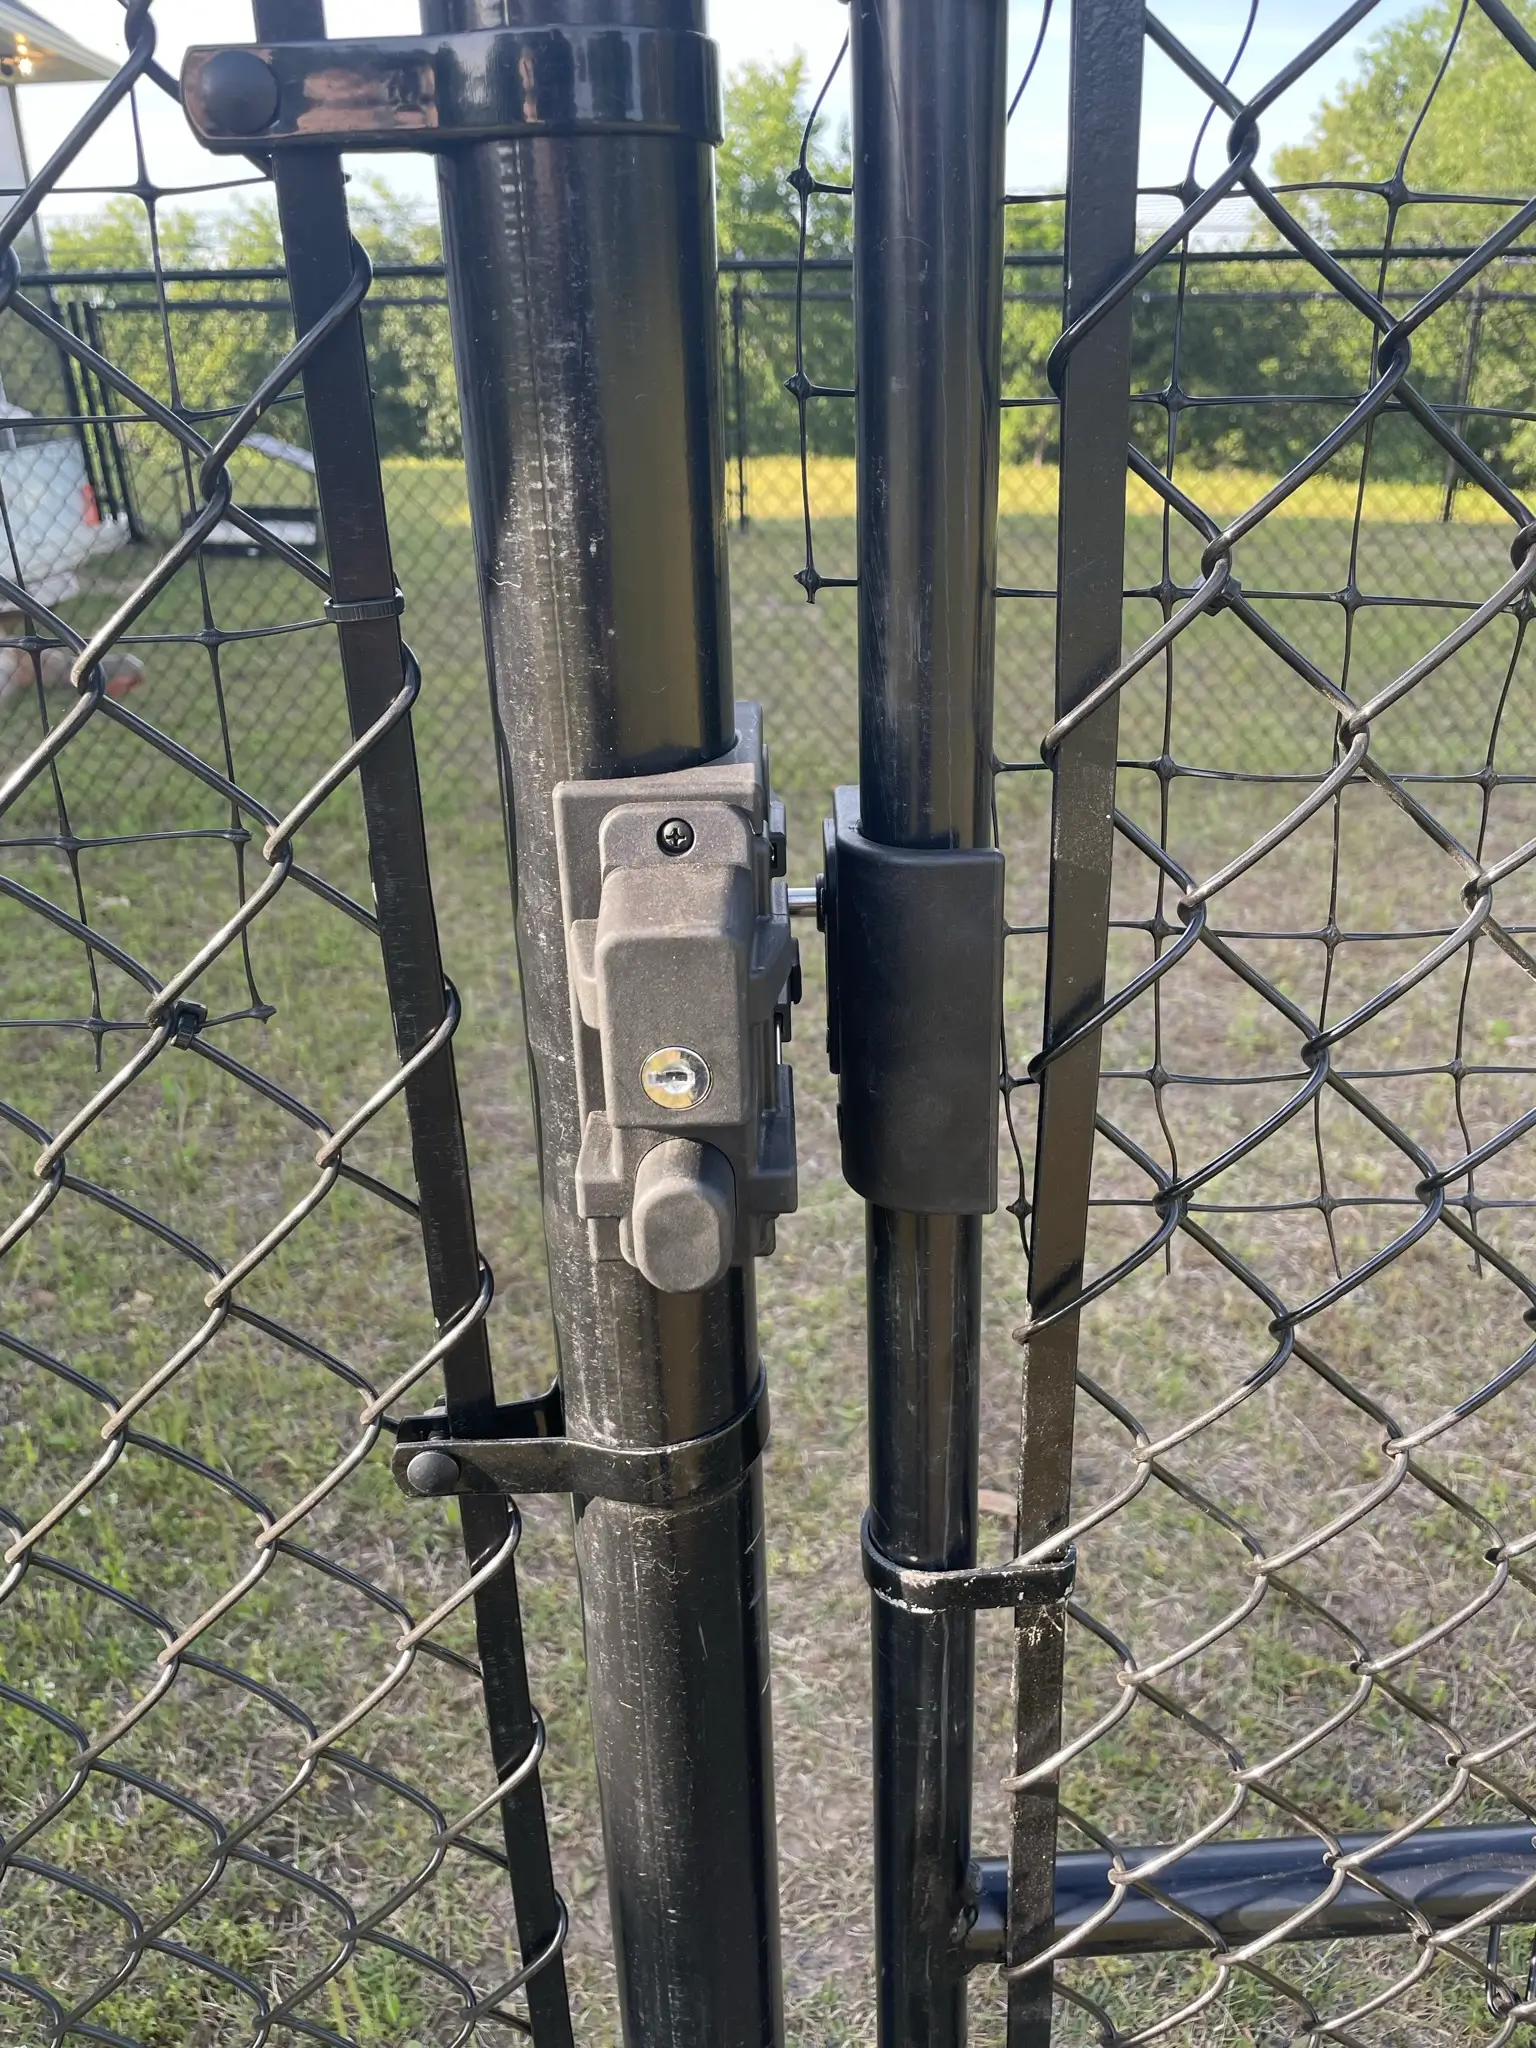 Locked gate